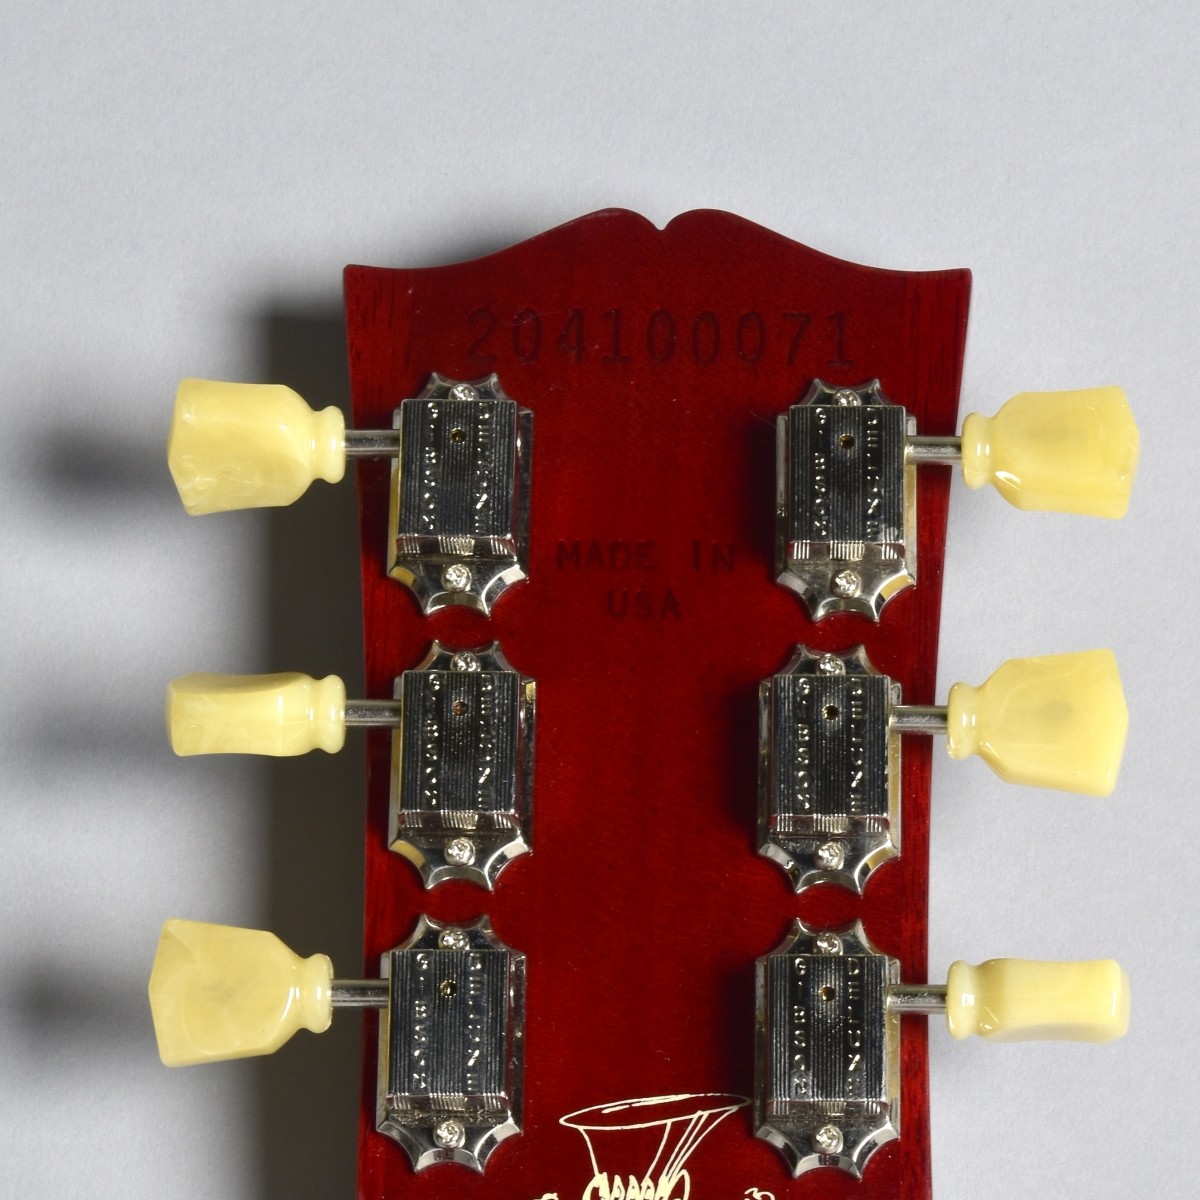 Gibson - Slash Les Paul Guitar w/ Case